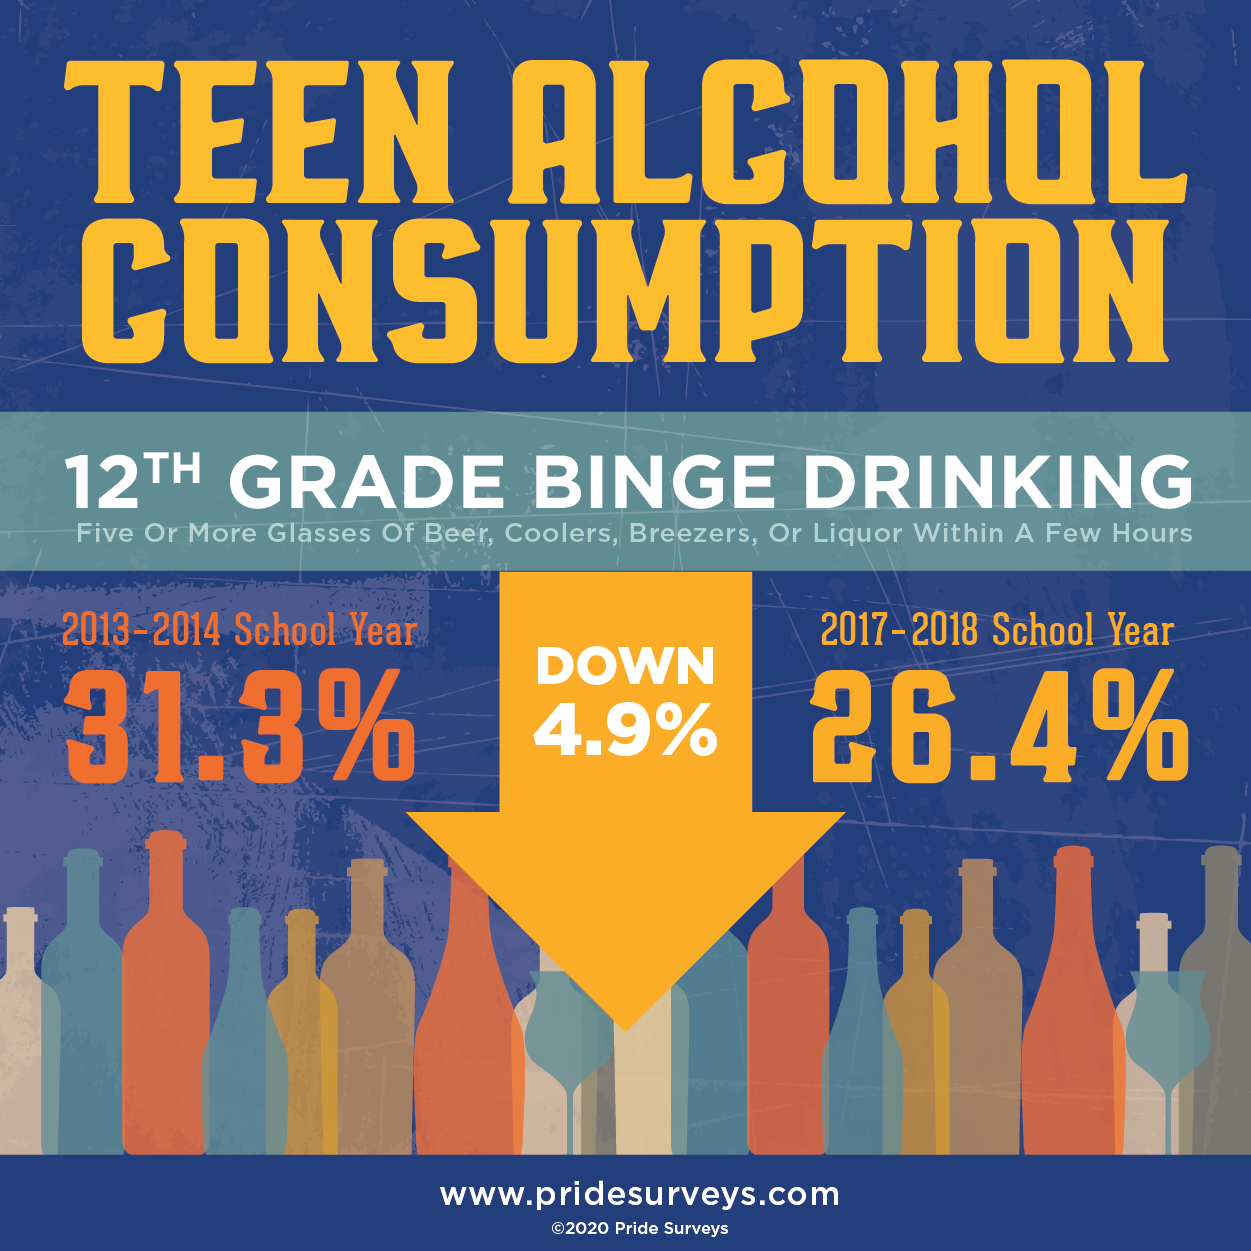 binge drinking posters